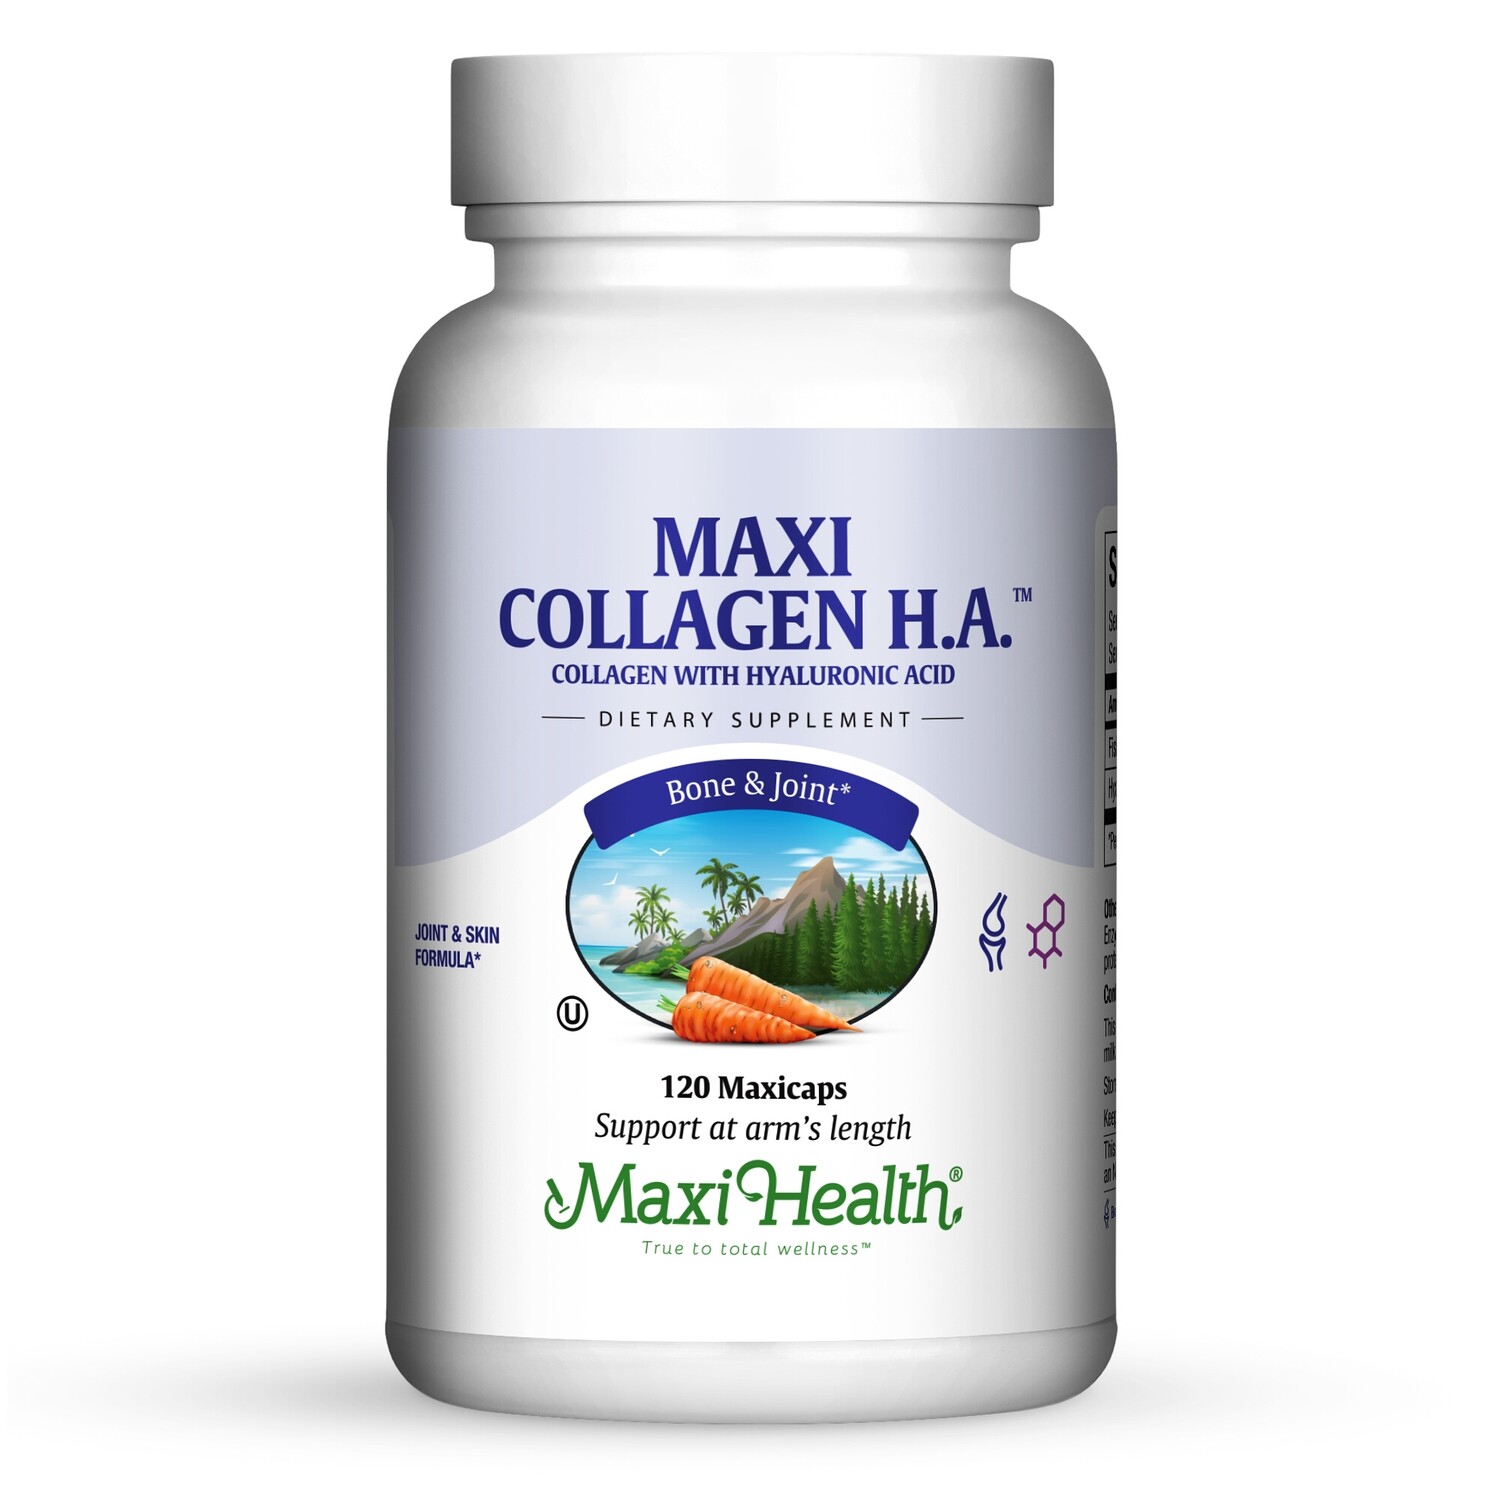 Maxi Health, Kosher Maxi Collagen H.A. - 120 Vegetarian Capsules